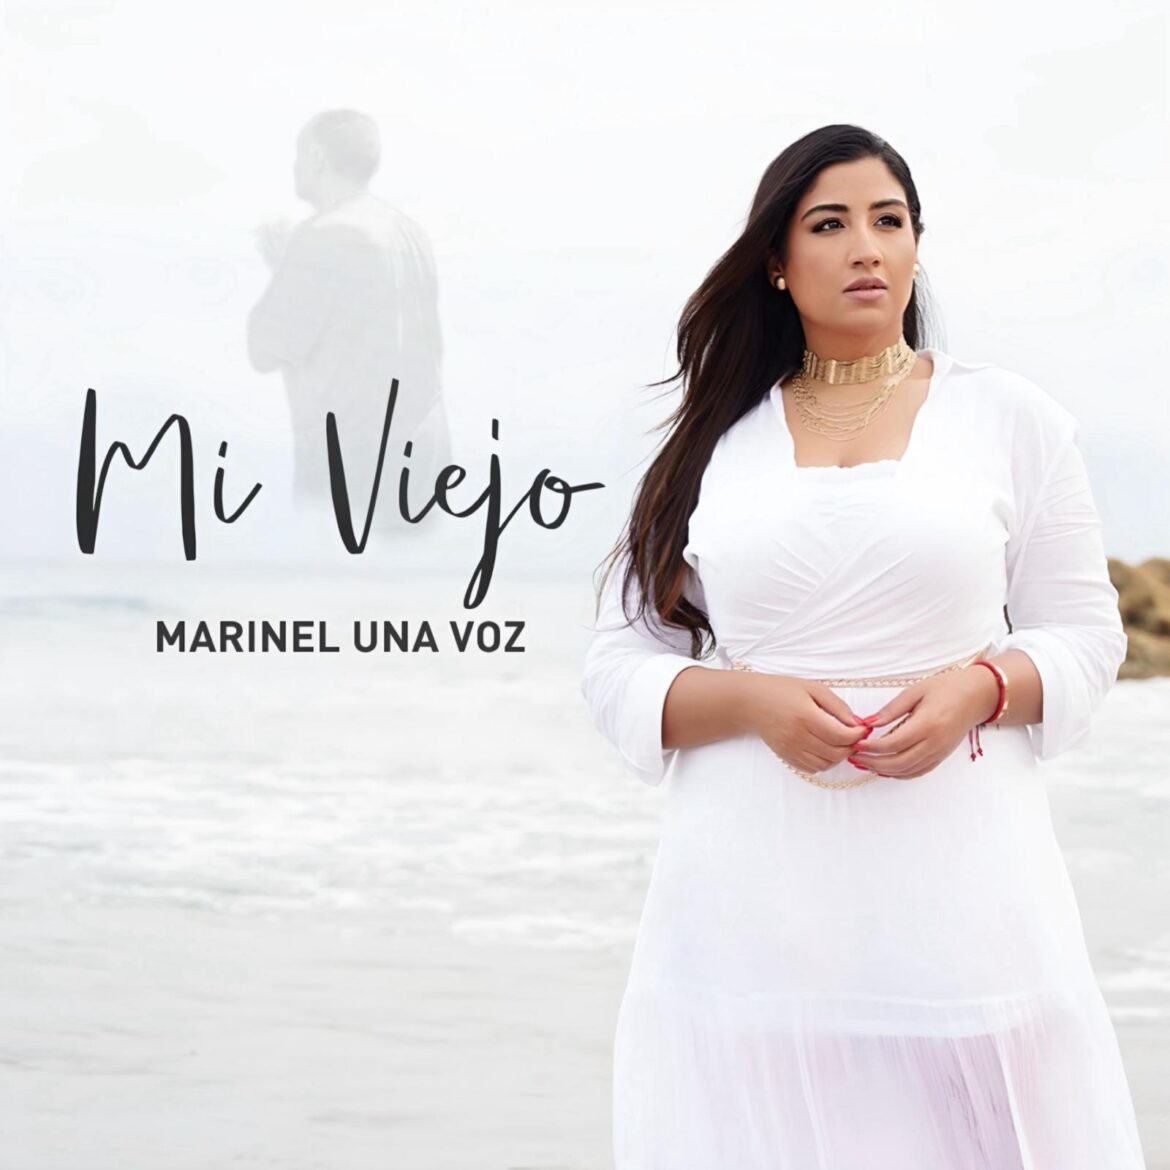 La soprano Marinel Una Voz rinde Tributo con un Emotivo Cover de “Mi Viejo”